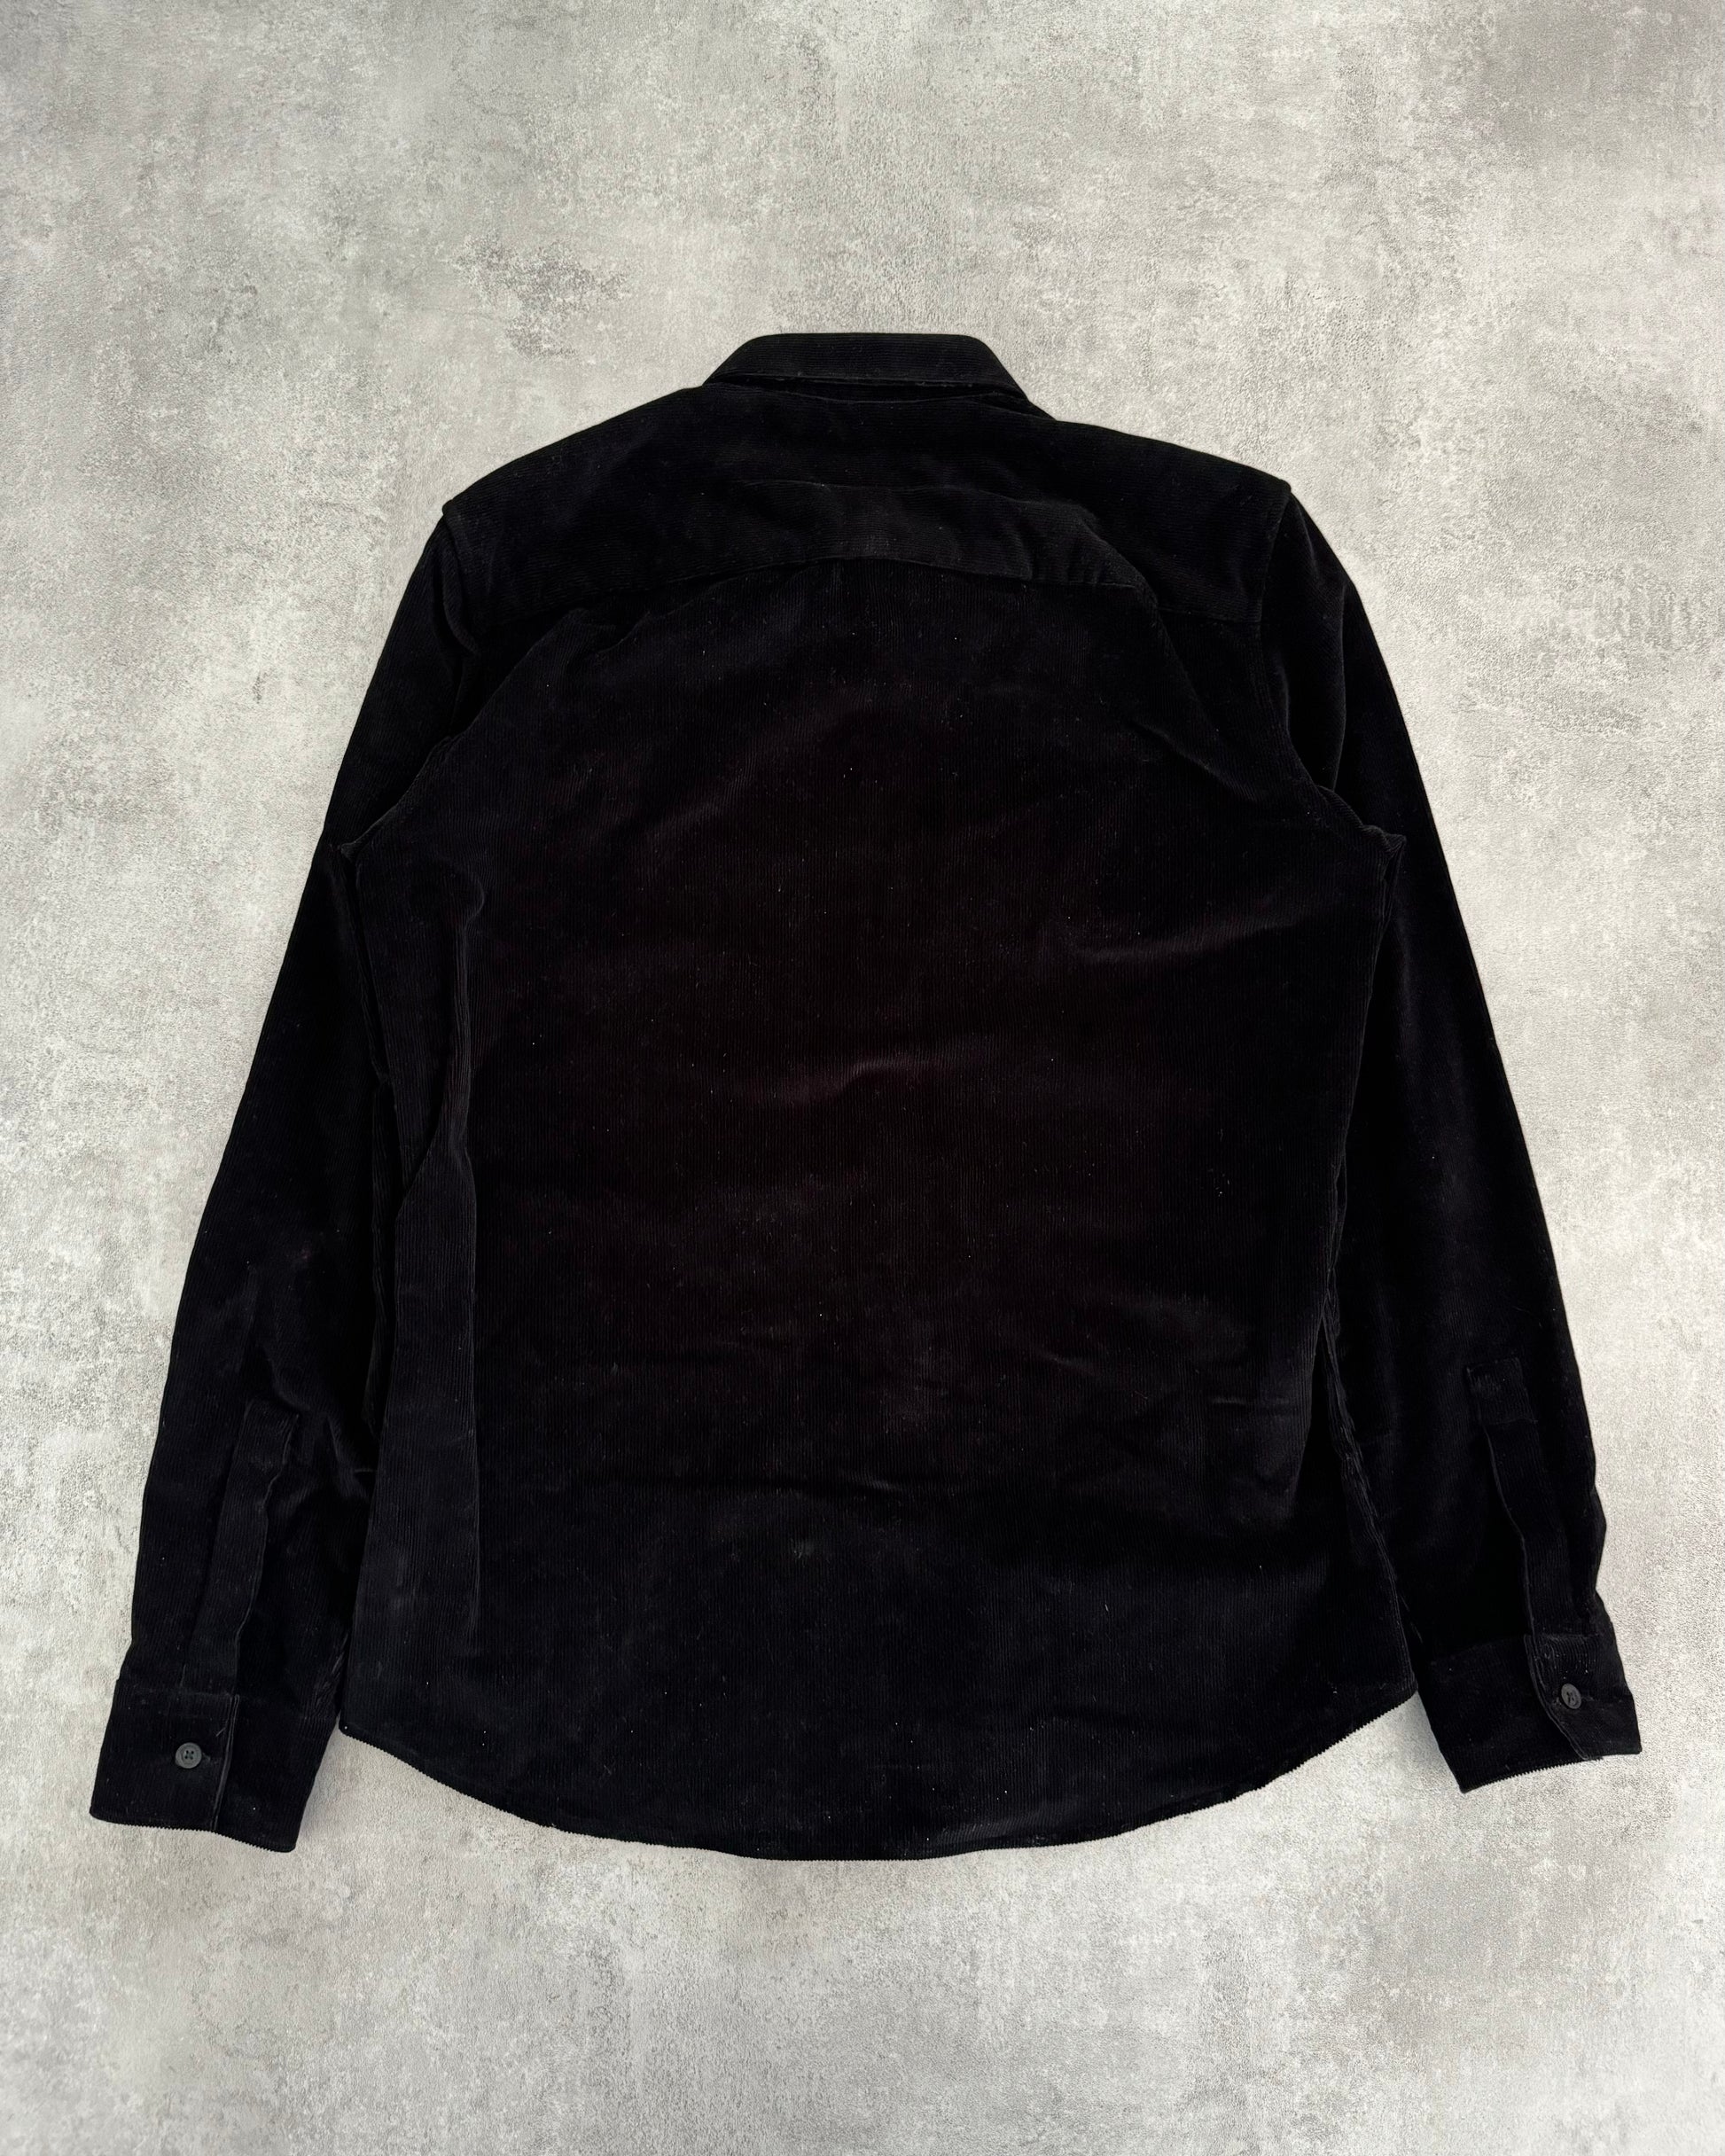 FW2014 Givenchy Pre-Collection Velvet Shirt (S) - 2